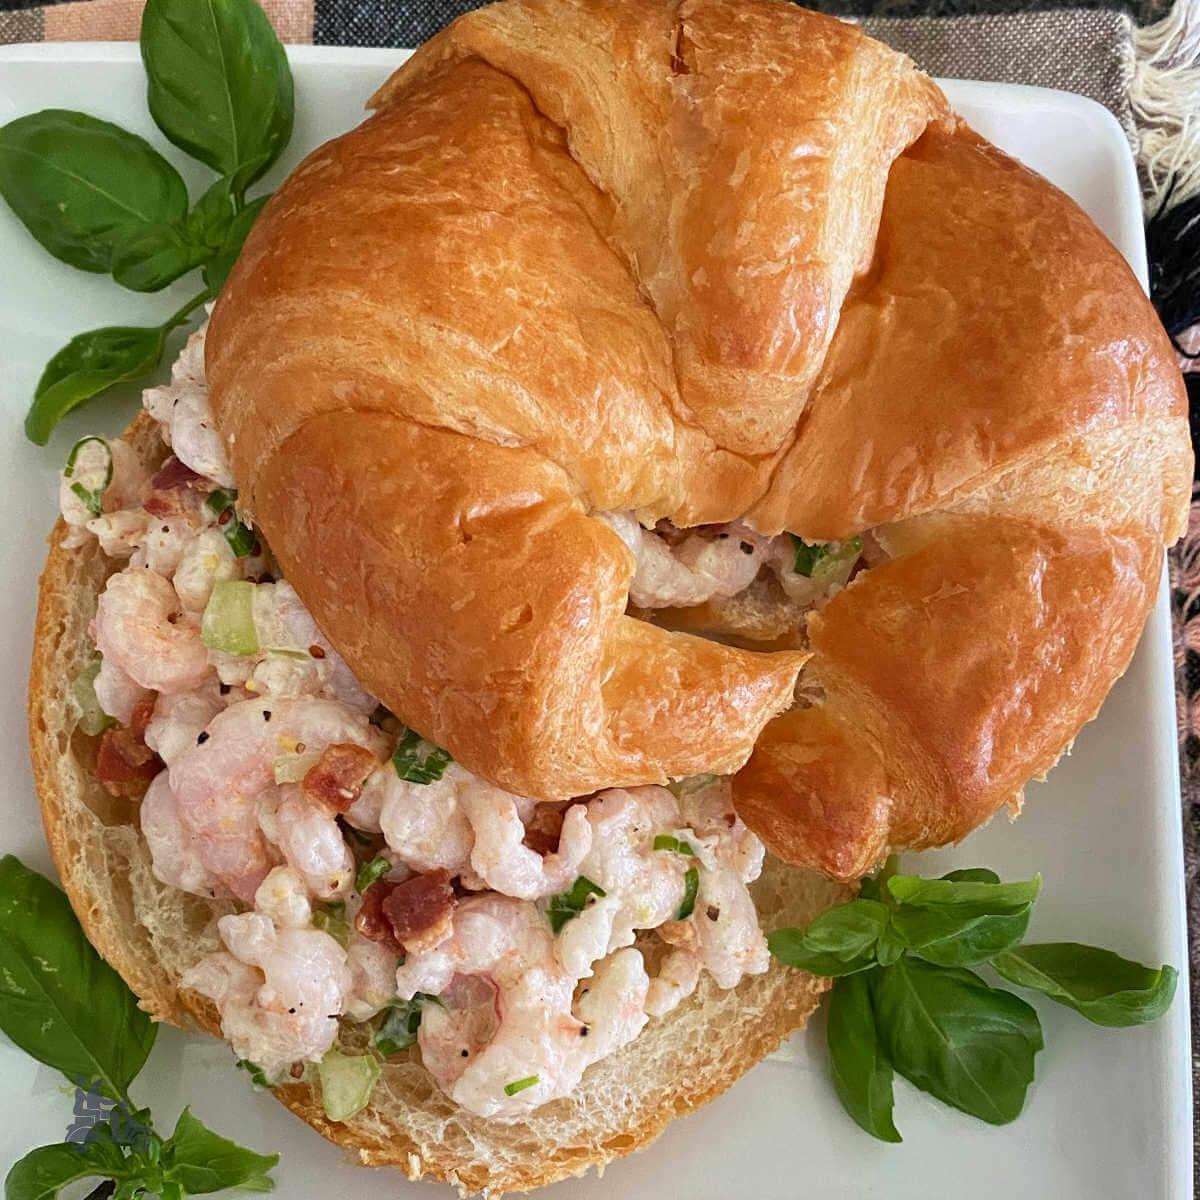 Shrimp salad on a croissant roll.